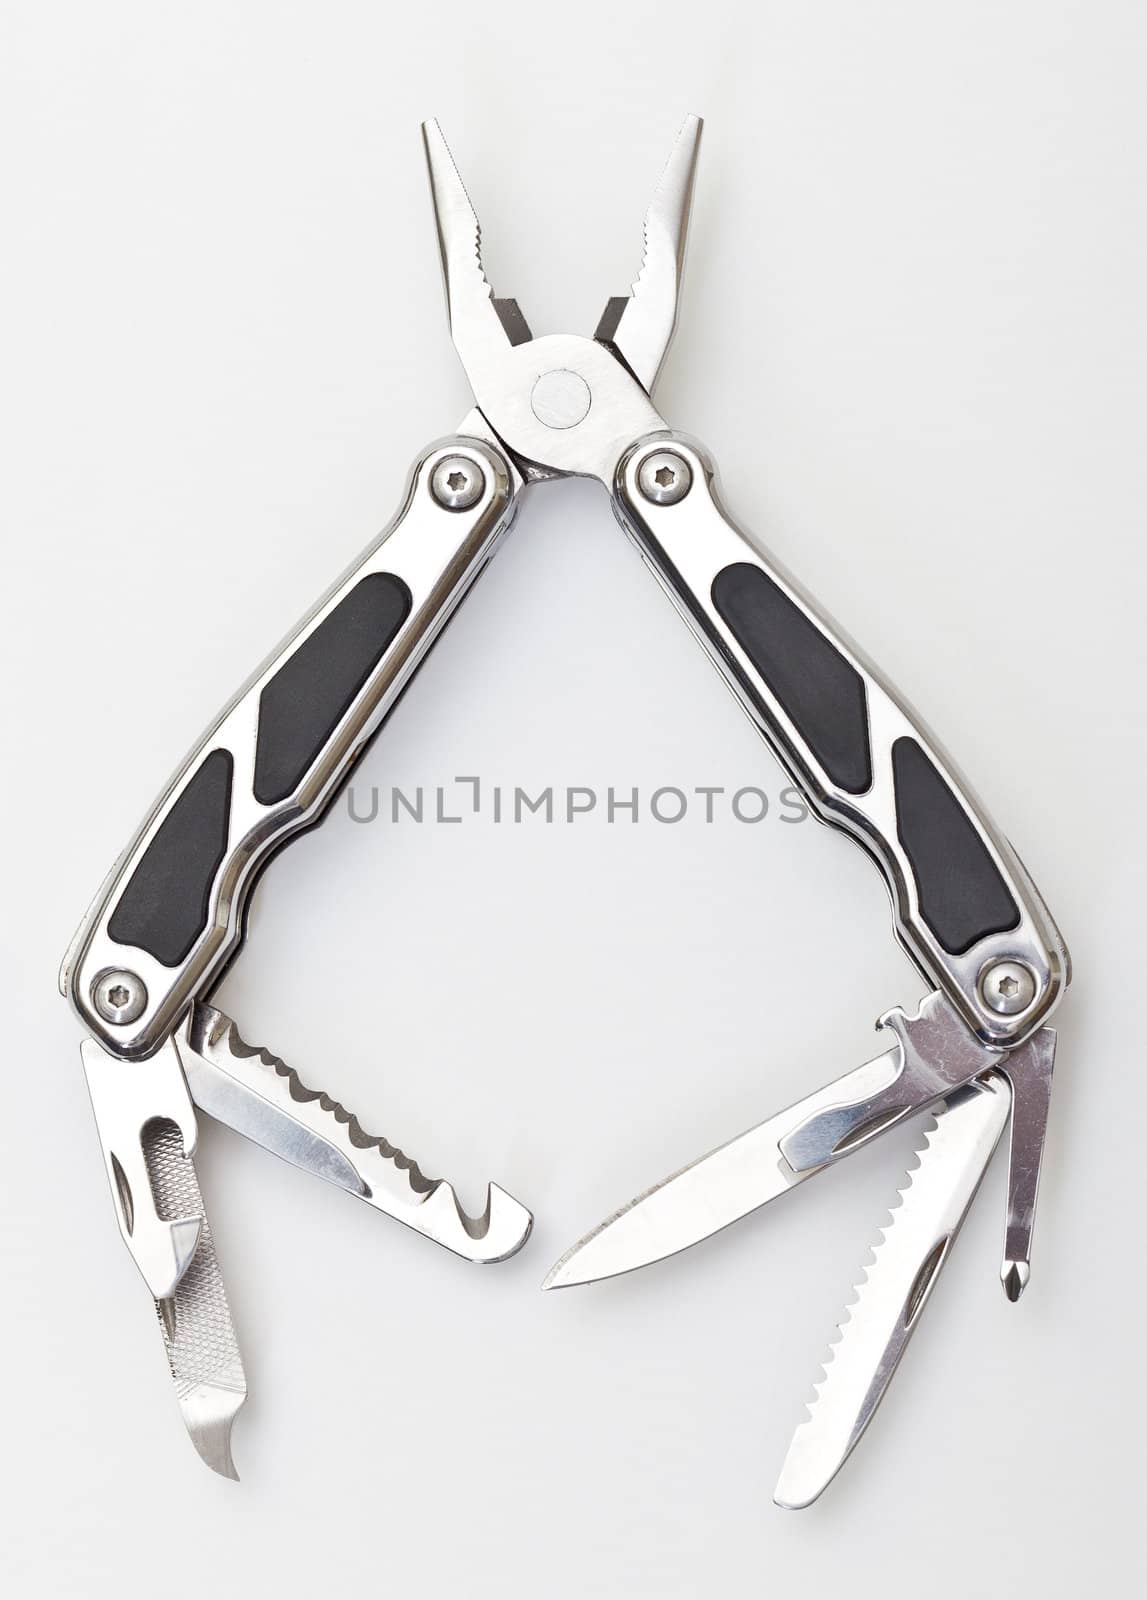 Steel pliers folding multi tool opened on white background